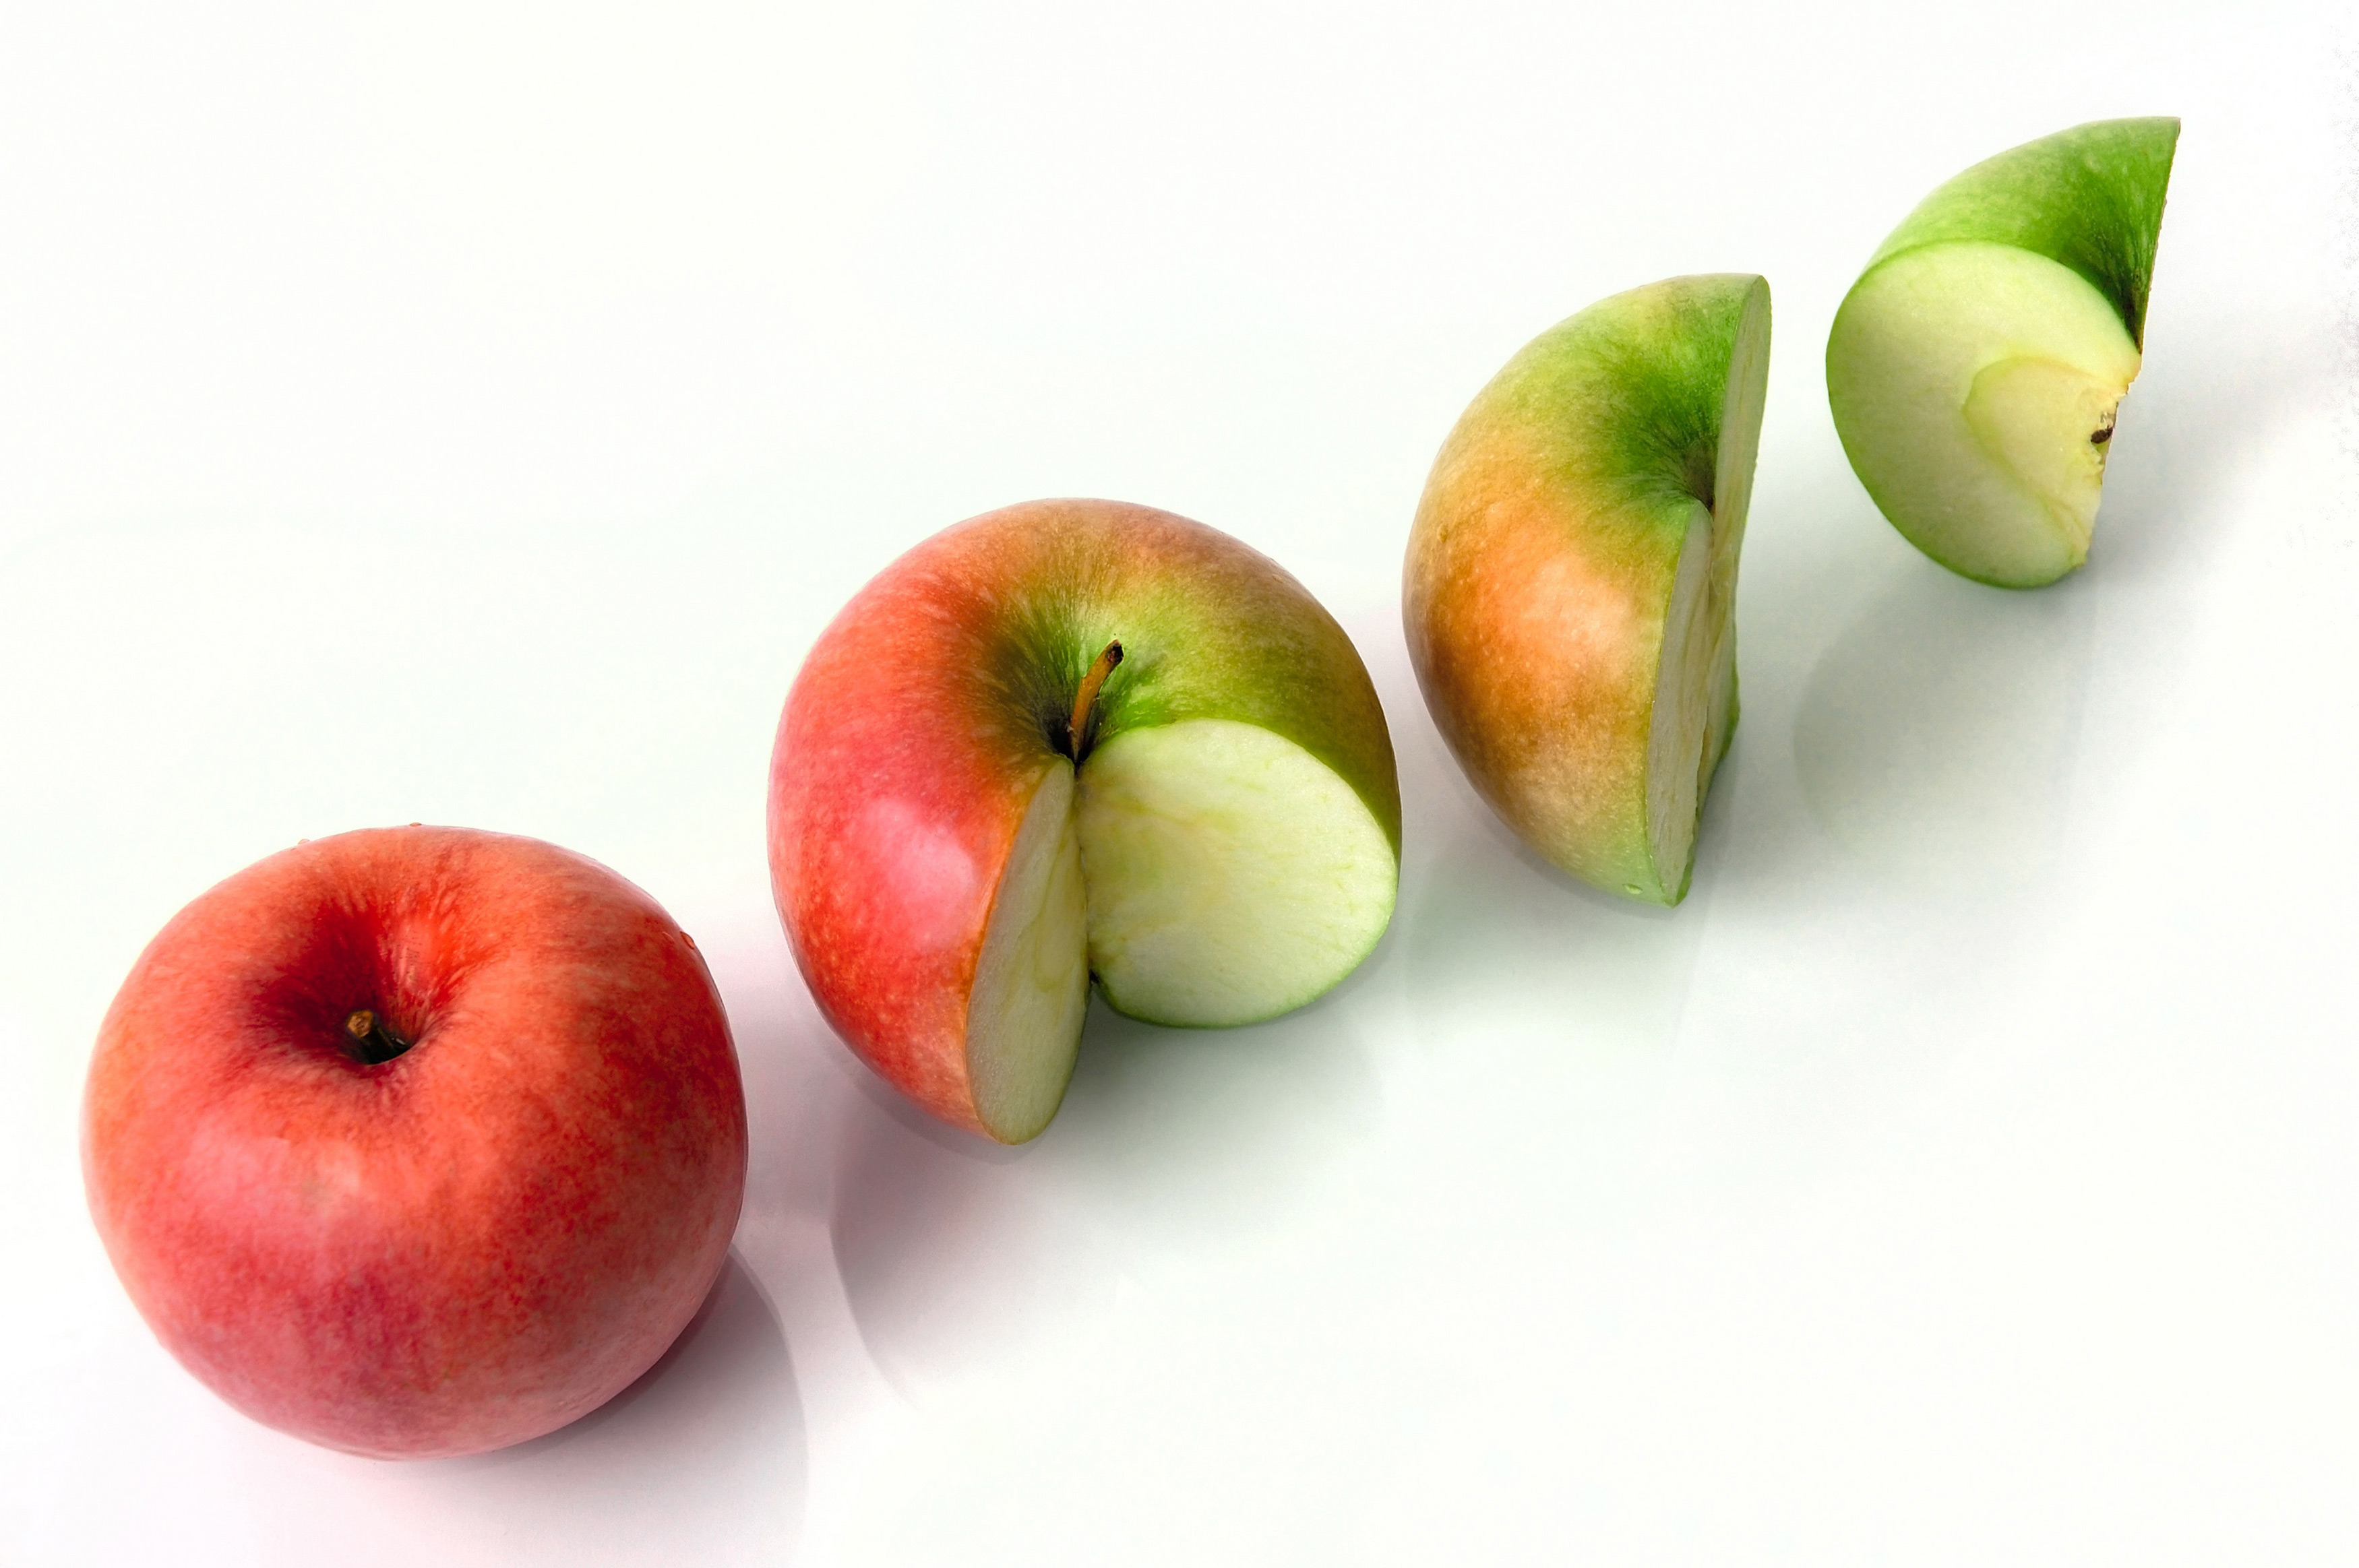 Две трети яблока. Целое яблоко. Четверть яблока. Разрезанное яблоко. Половина яблока.